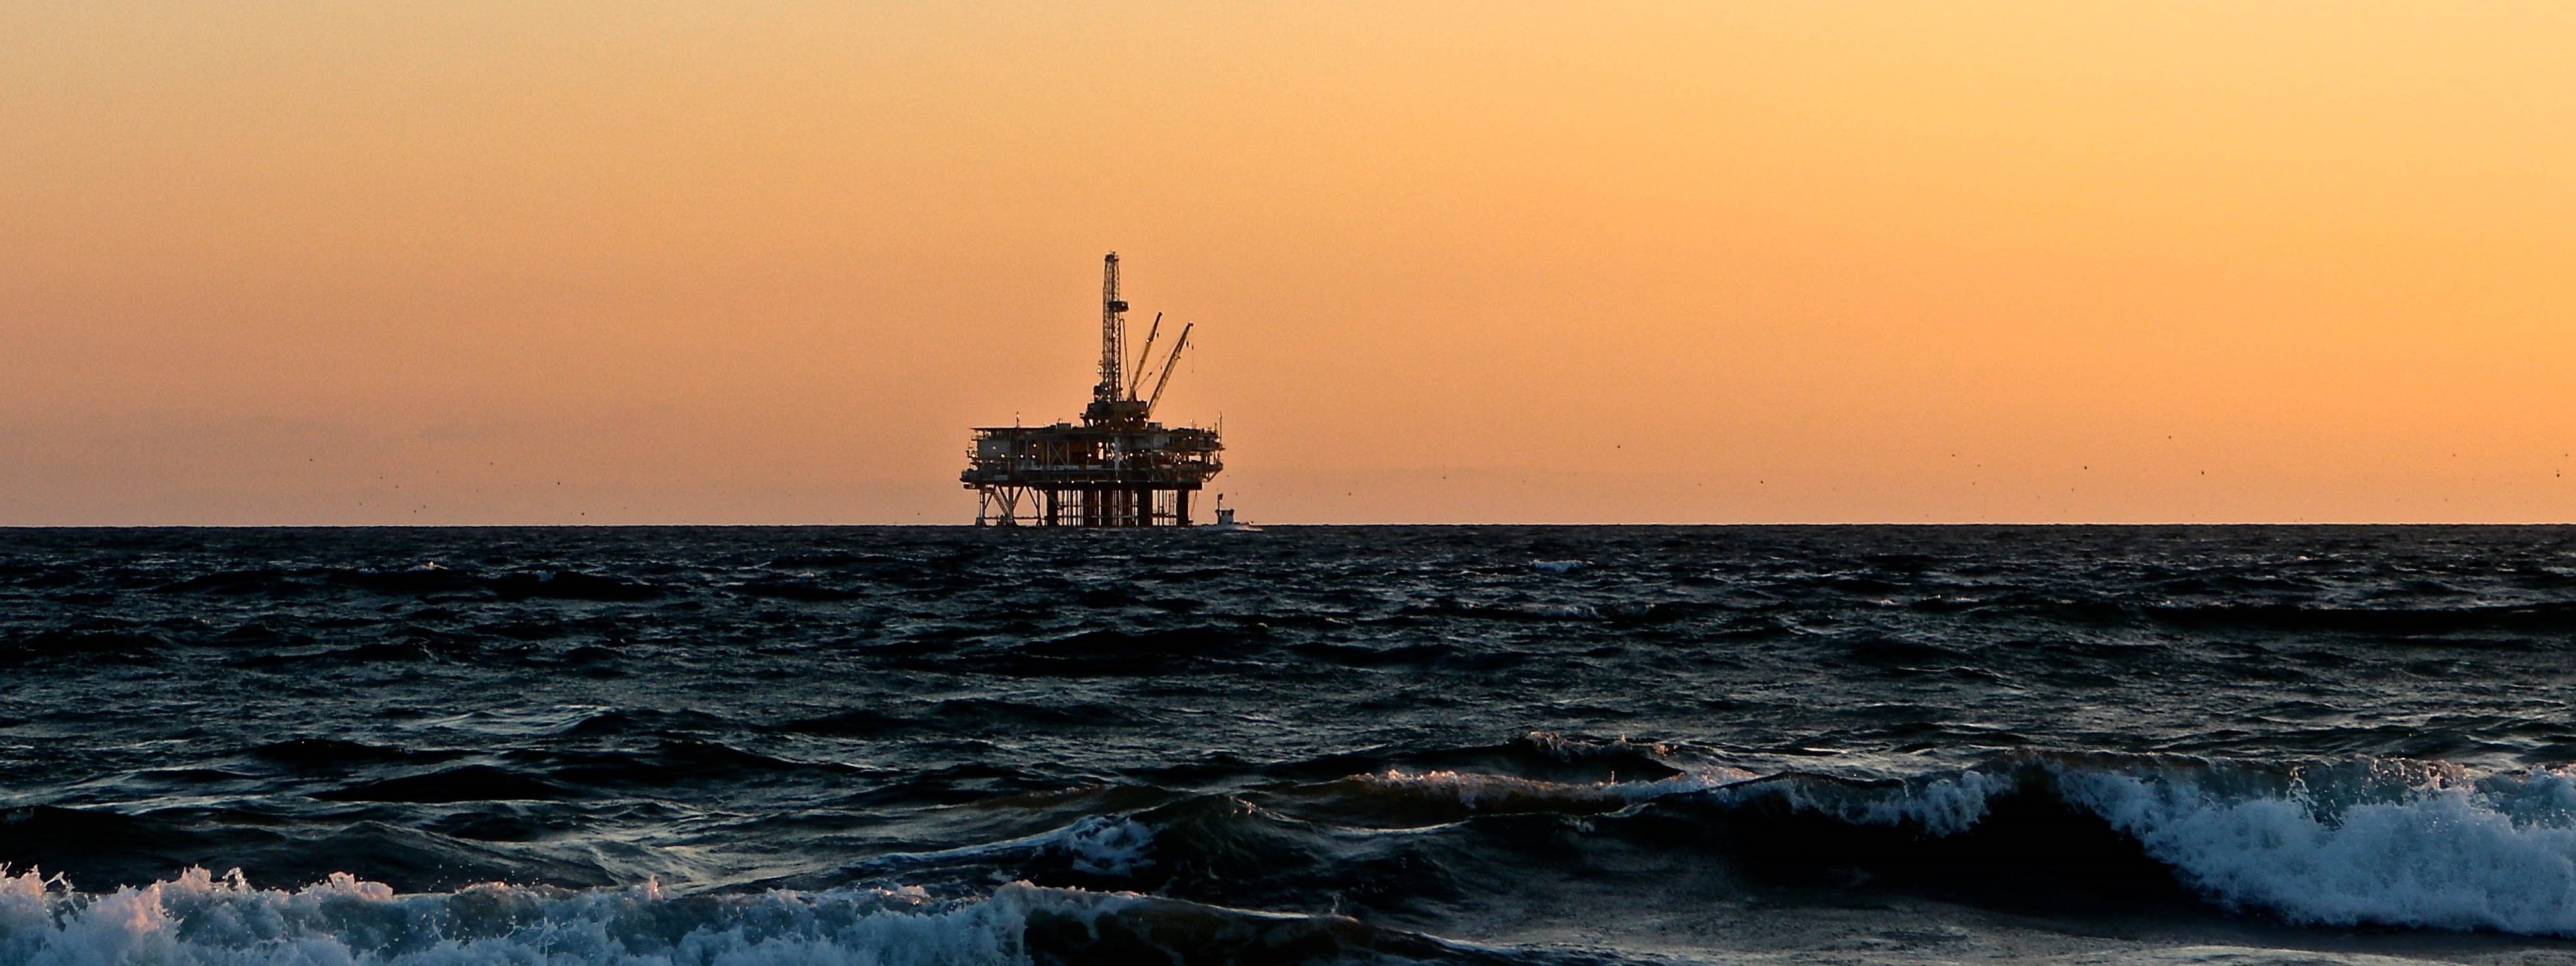 Oljerigg i sjøen